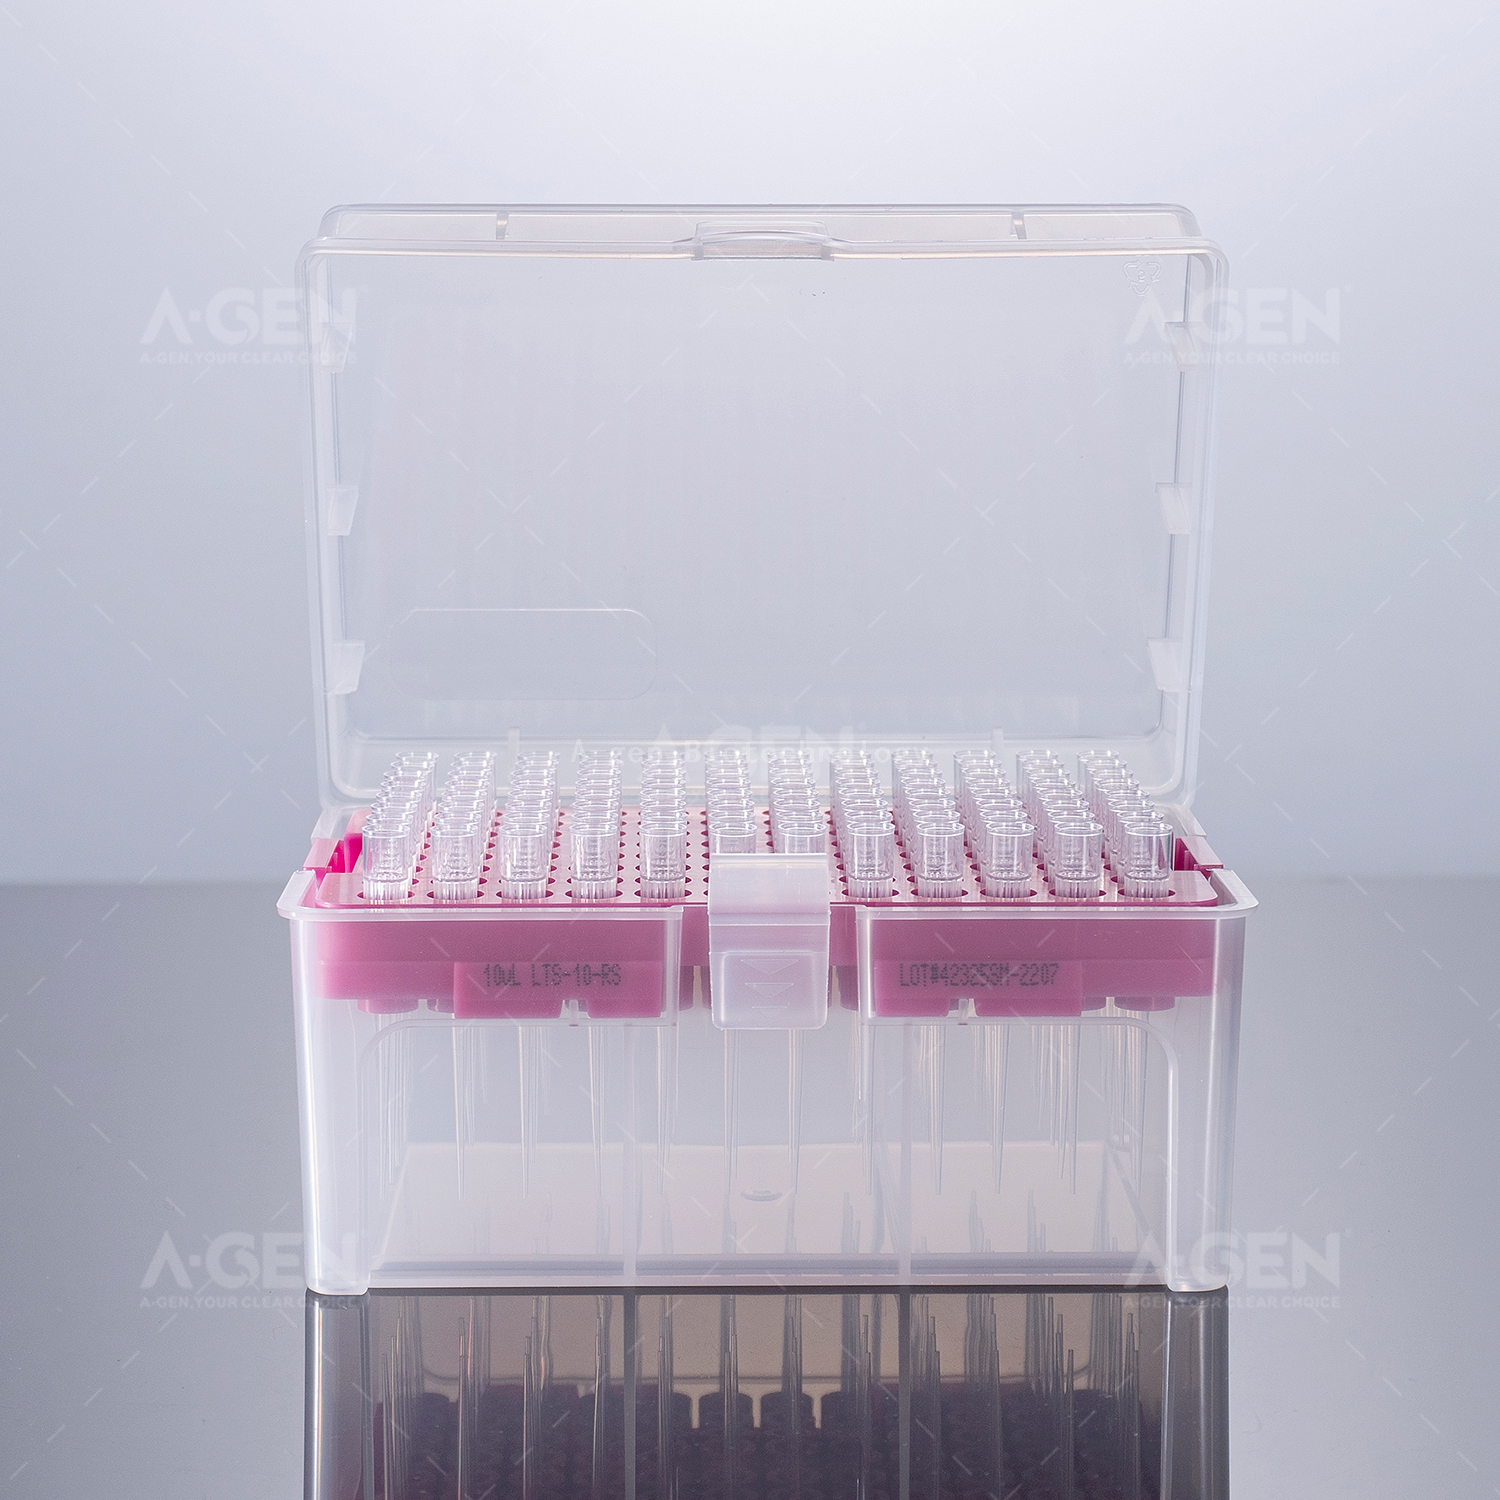 Rainin Sterilization Low Retention 10uL Transparent Globe Scientific Pipette Tips Packed in Rack 